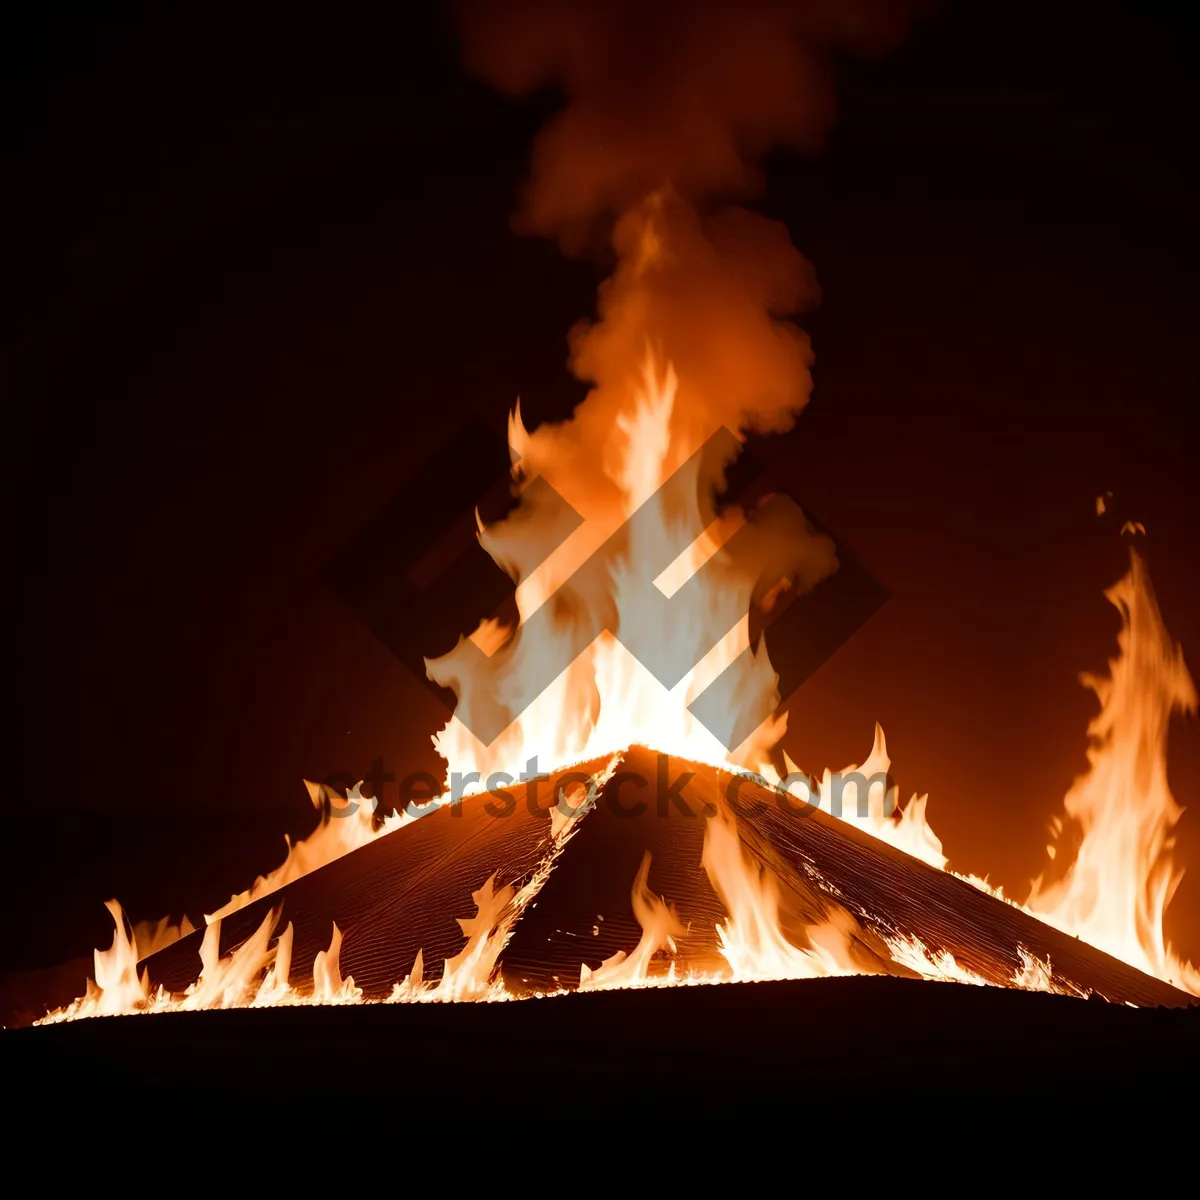 Picture of Fiery Blaze: Burning Coal Ignites Explosive Power